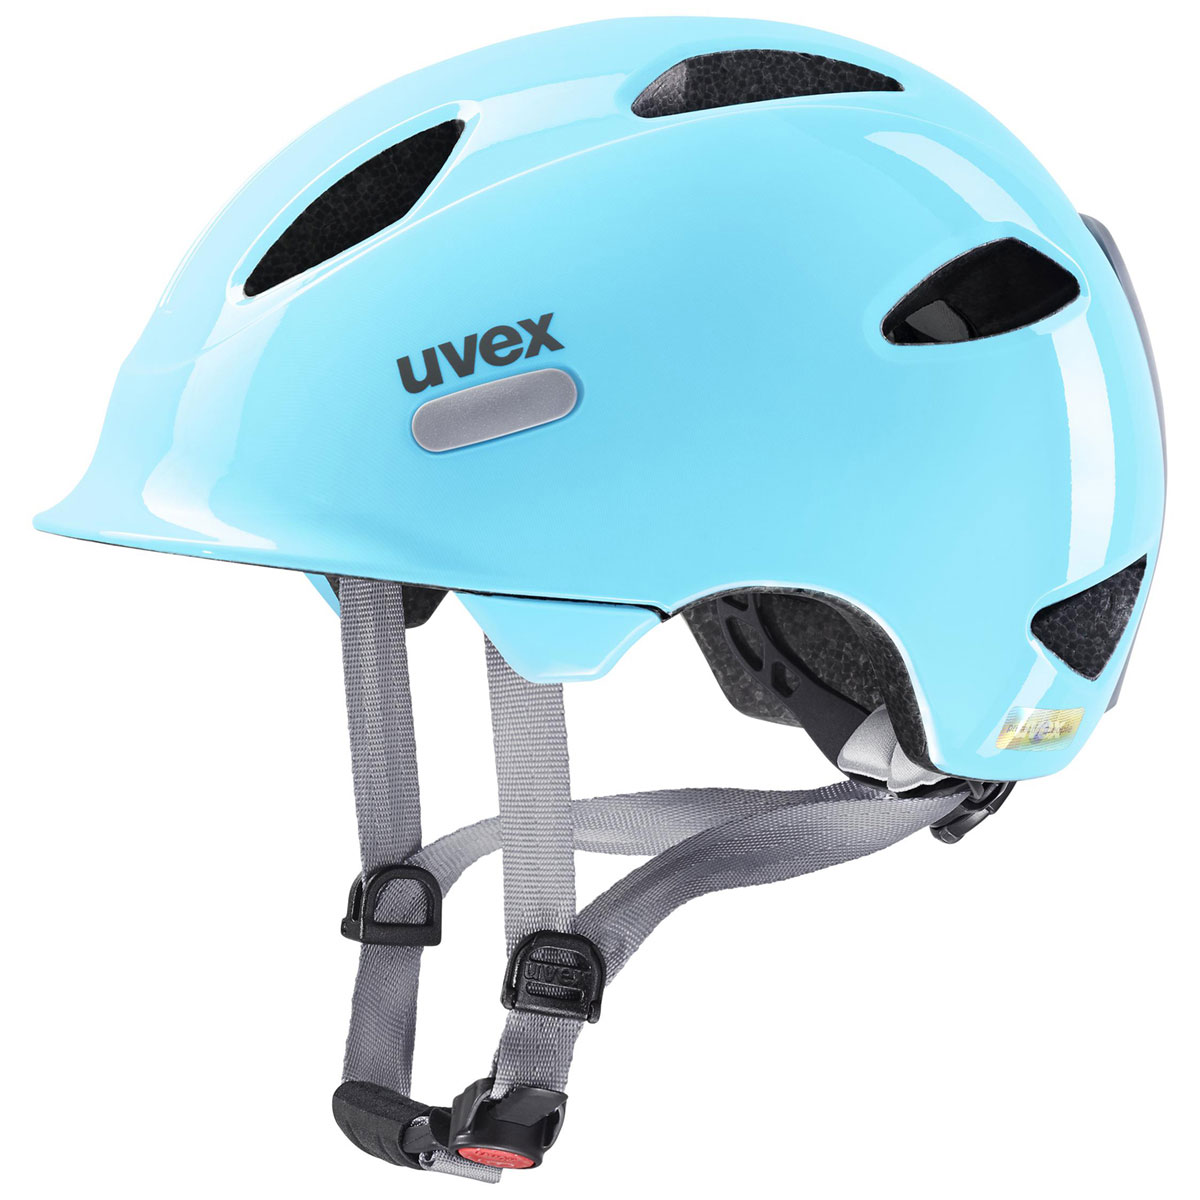 Dětská cyklistická helma Uvex OYO, Cloud Blue - Grey 46-50cm